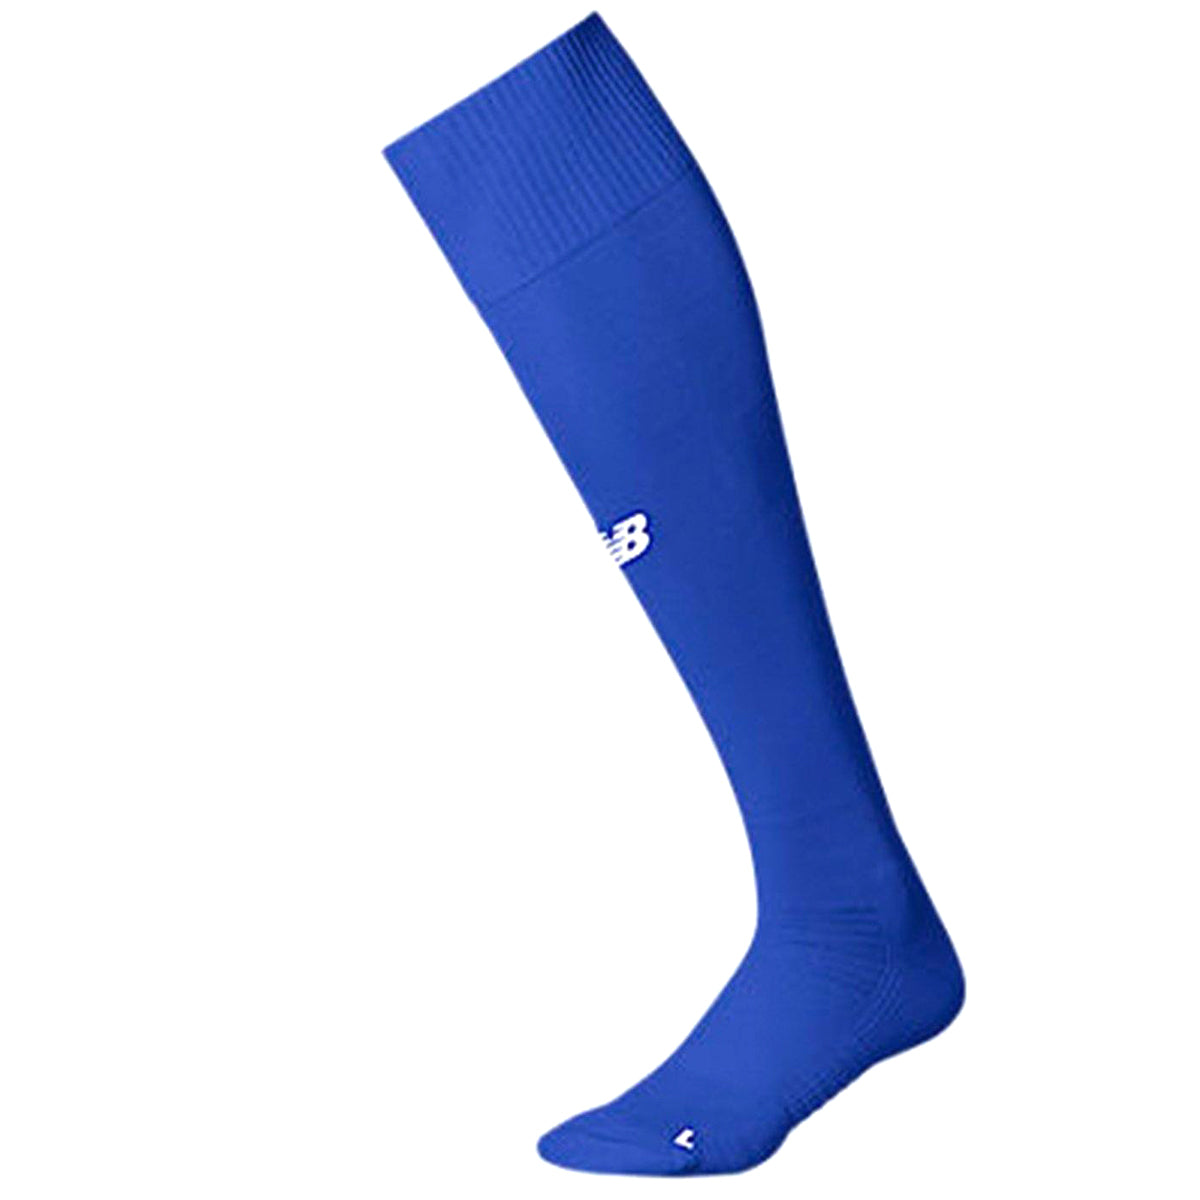 NWISC 2021 Match Sock - Bold Blue by Goal Kick Soccer